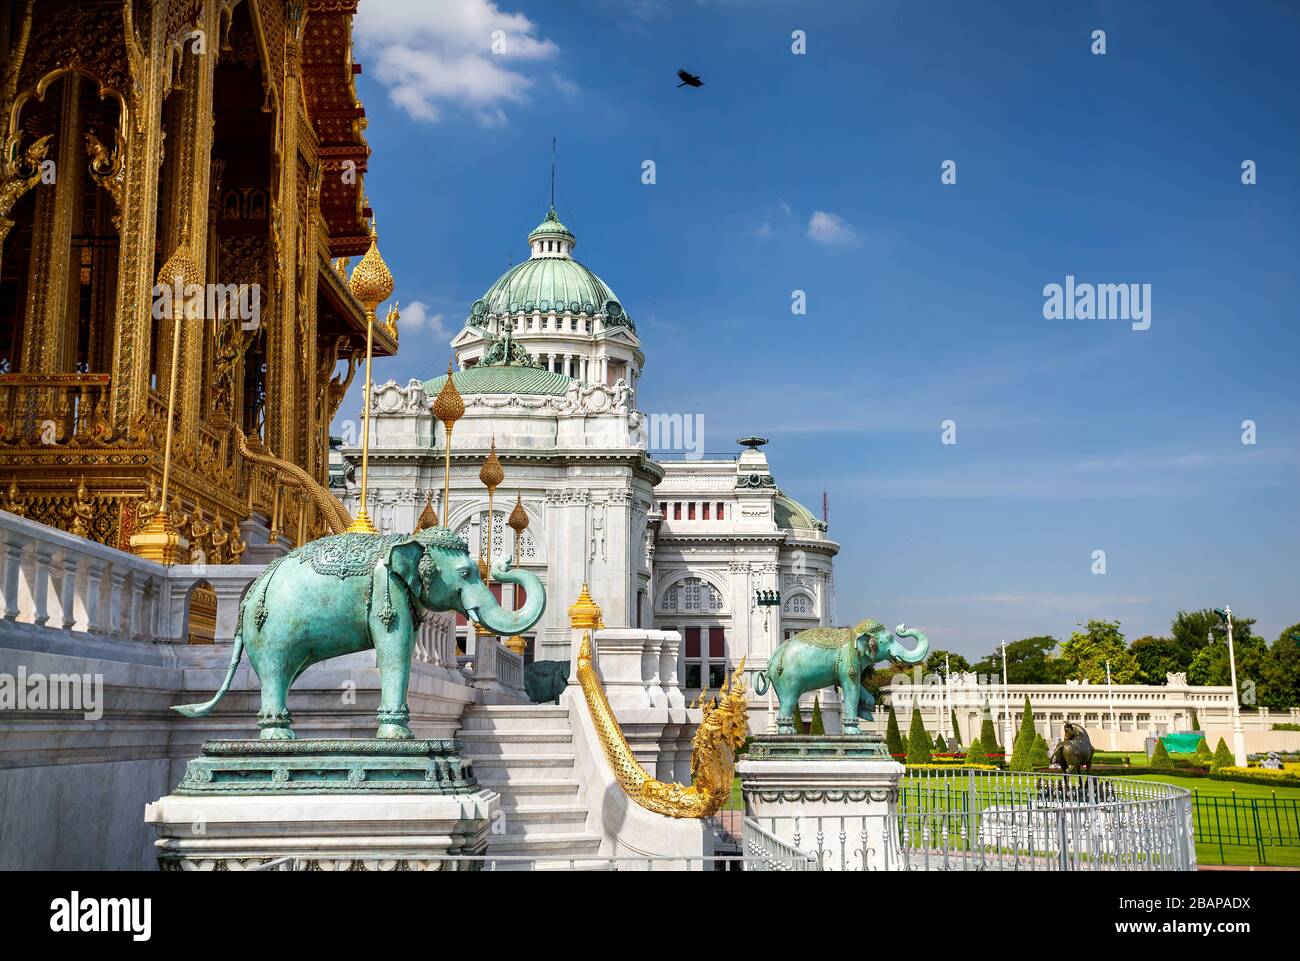 The Ananta Samakhom Throne Hall in Thai Royal Dusit Palace and green Elephant statues in Bangkok, Thailand Stock Photo